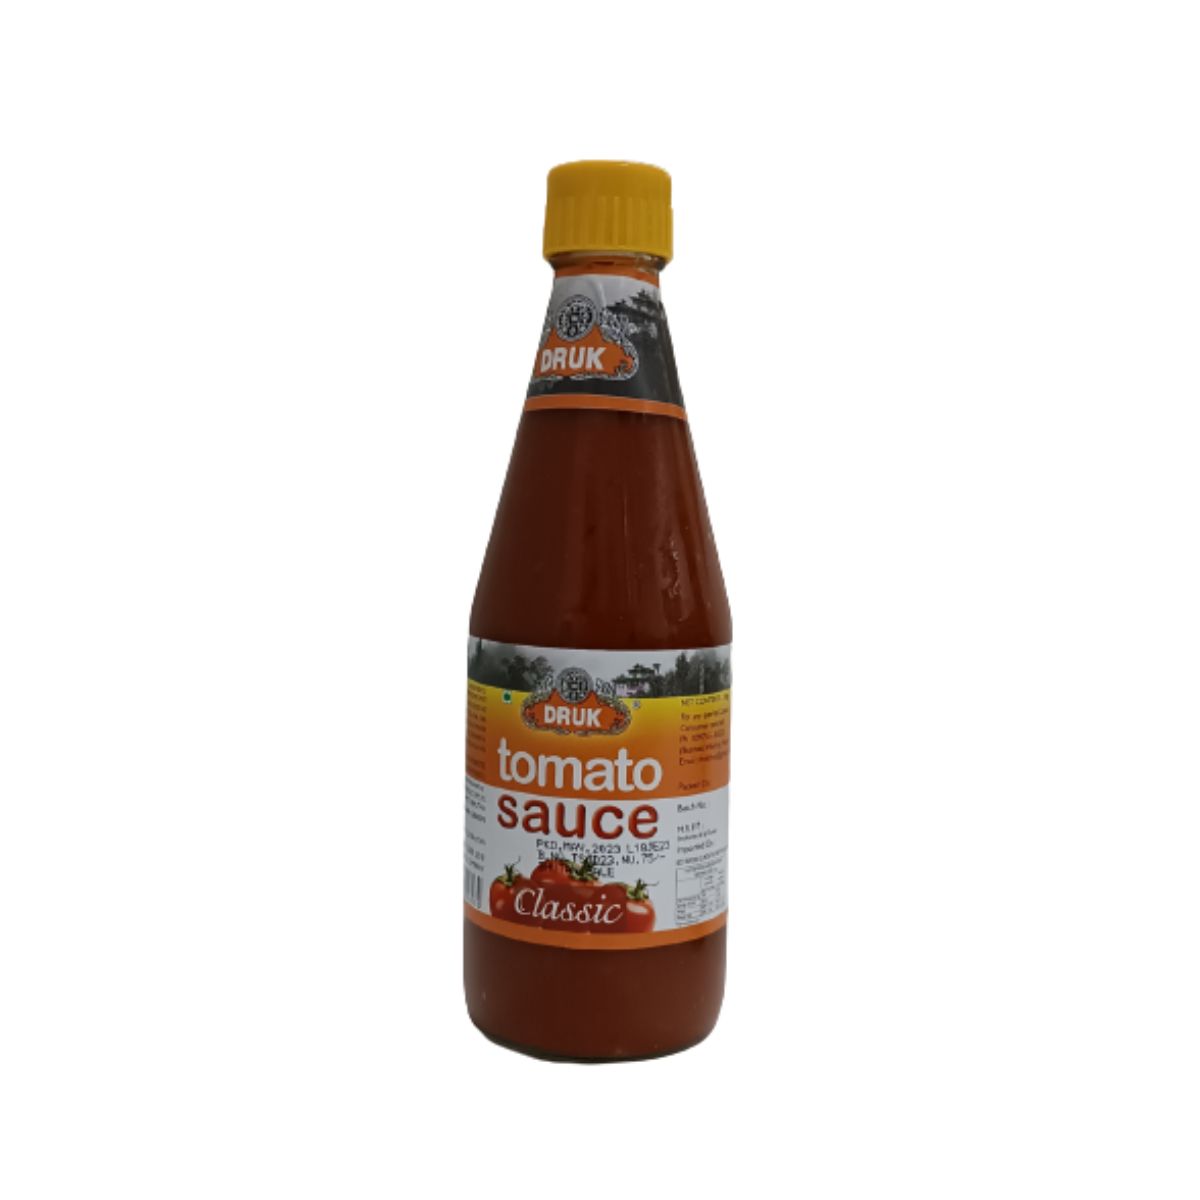 Druk Tomato Sauce Classic - 500g